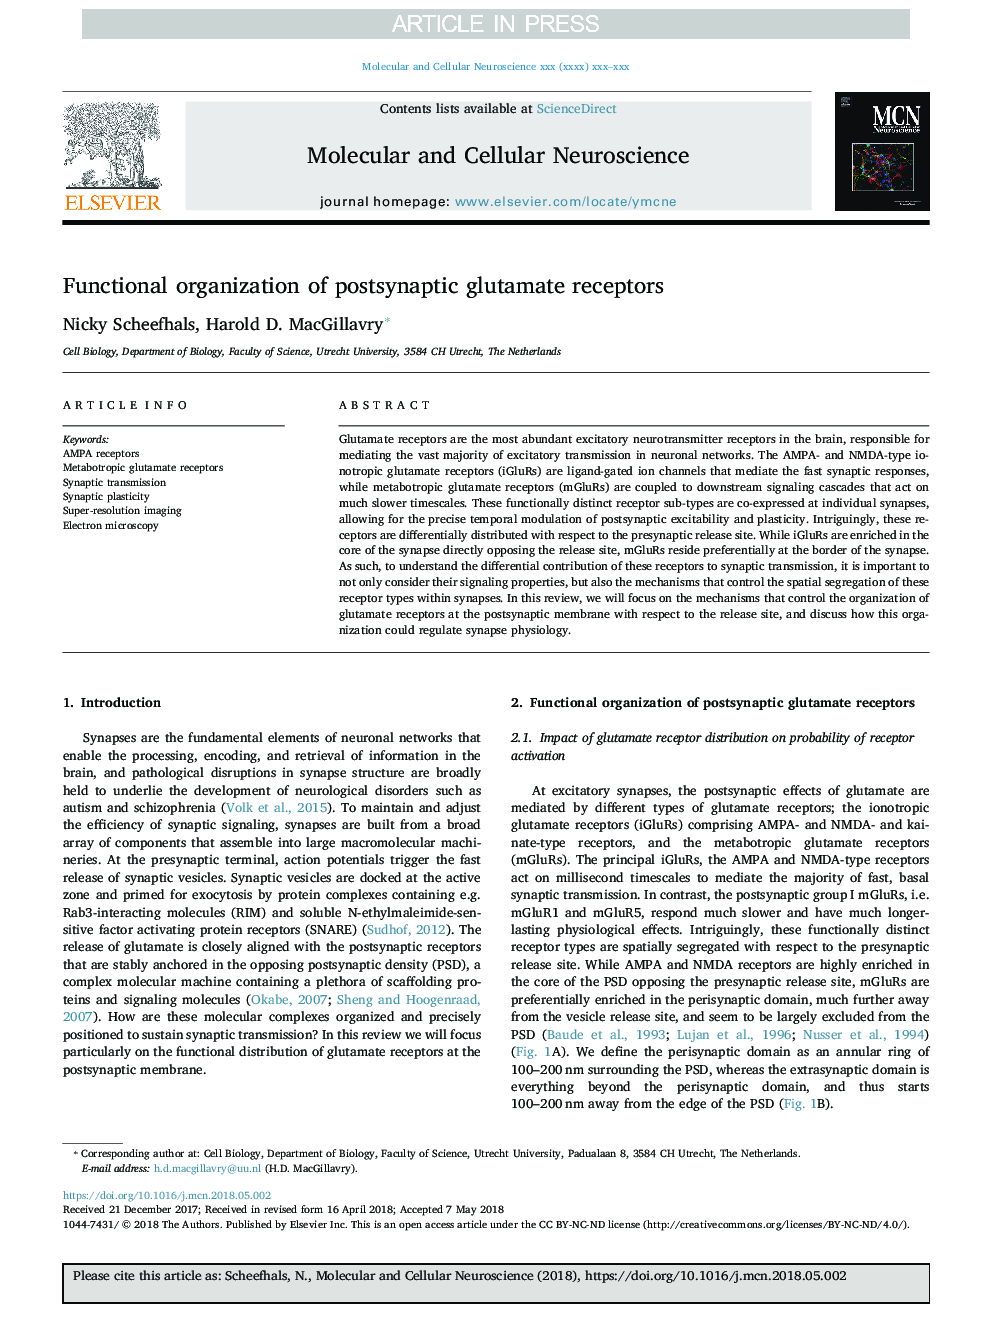 Functional organization of postsynaptic glutamate receptors